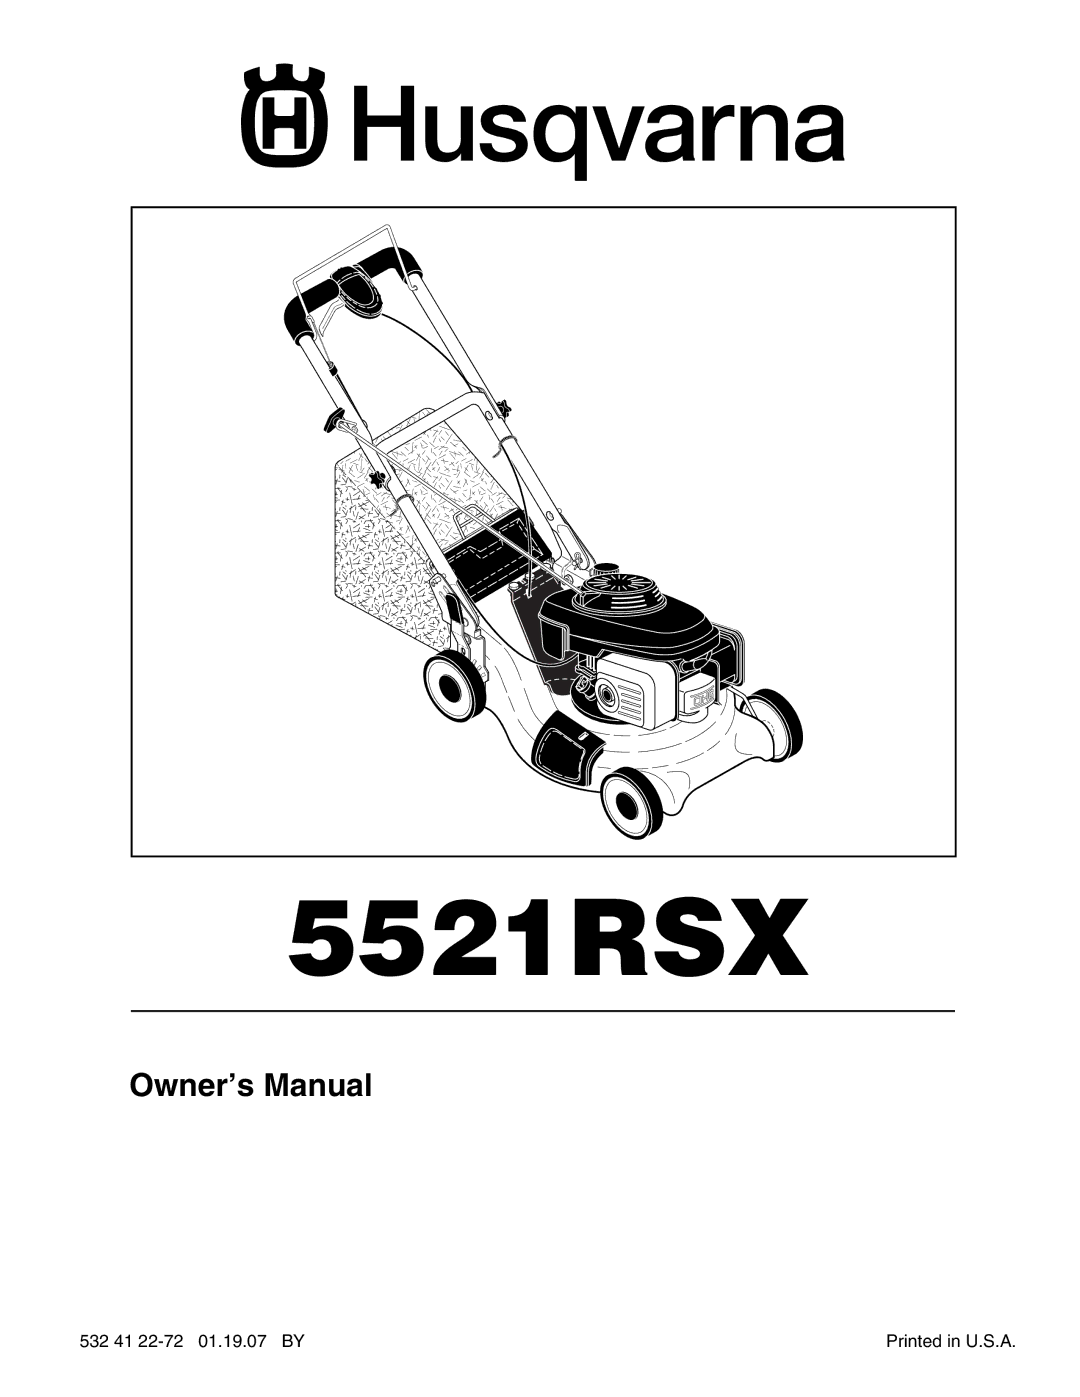 Husqvarna 5521RSX owner manual 